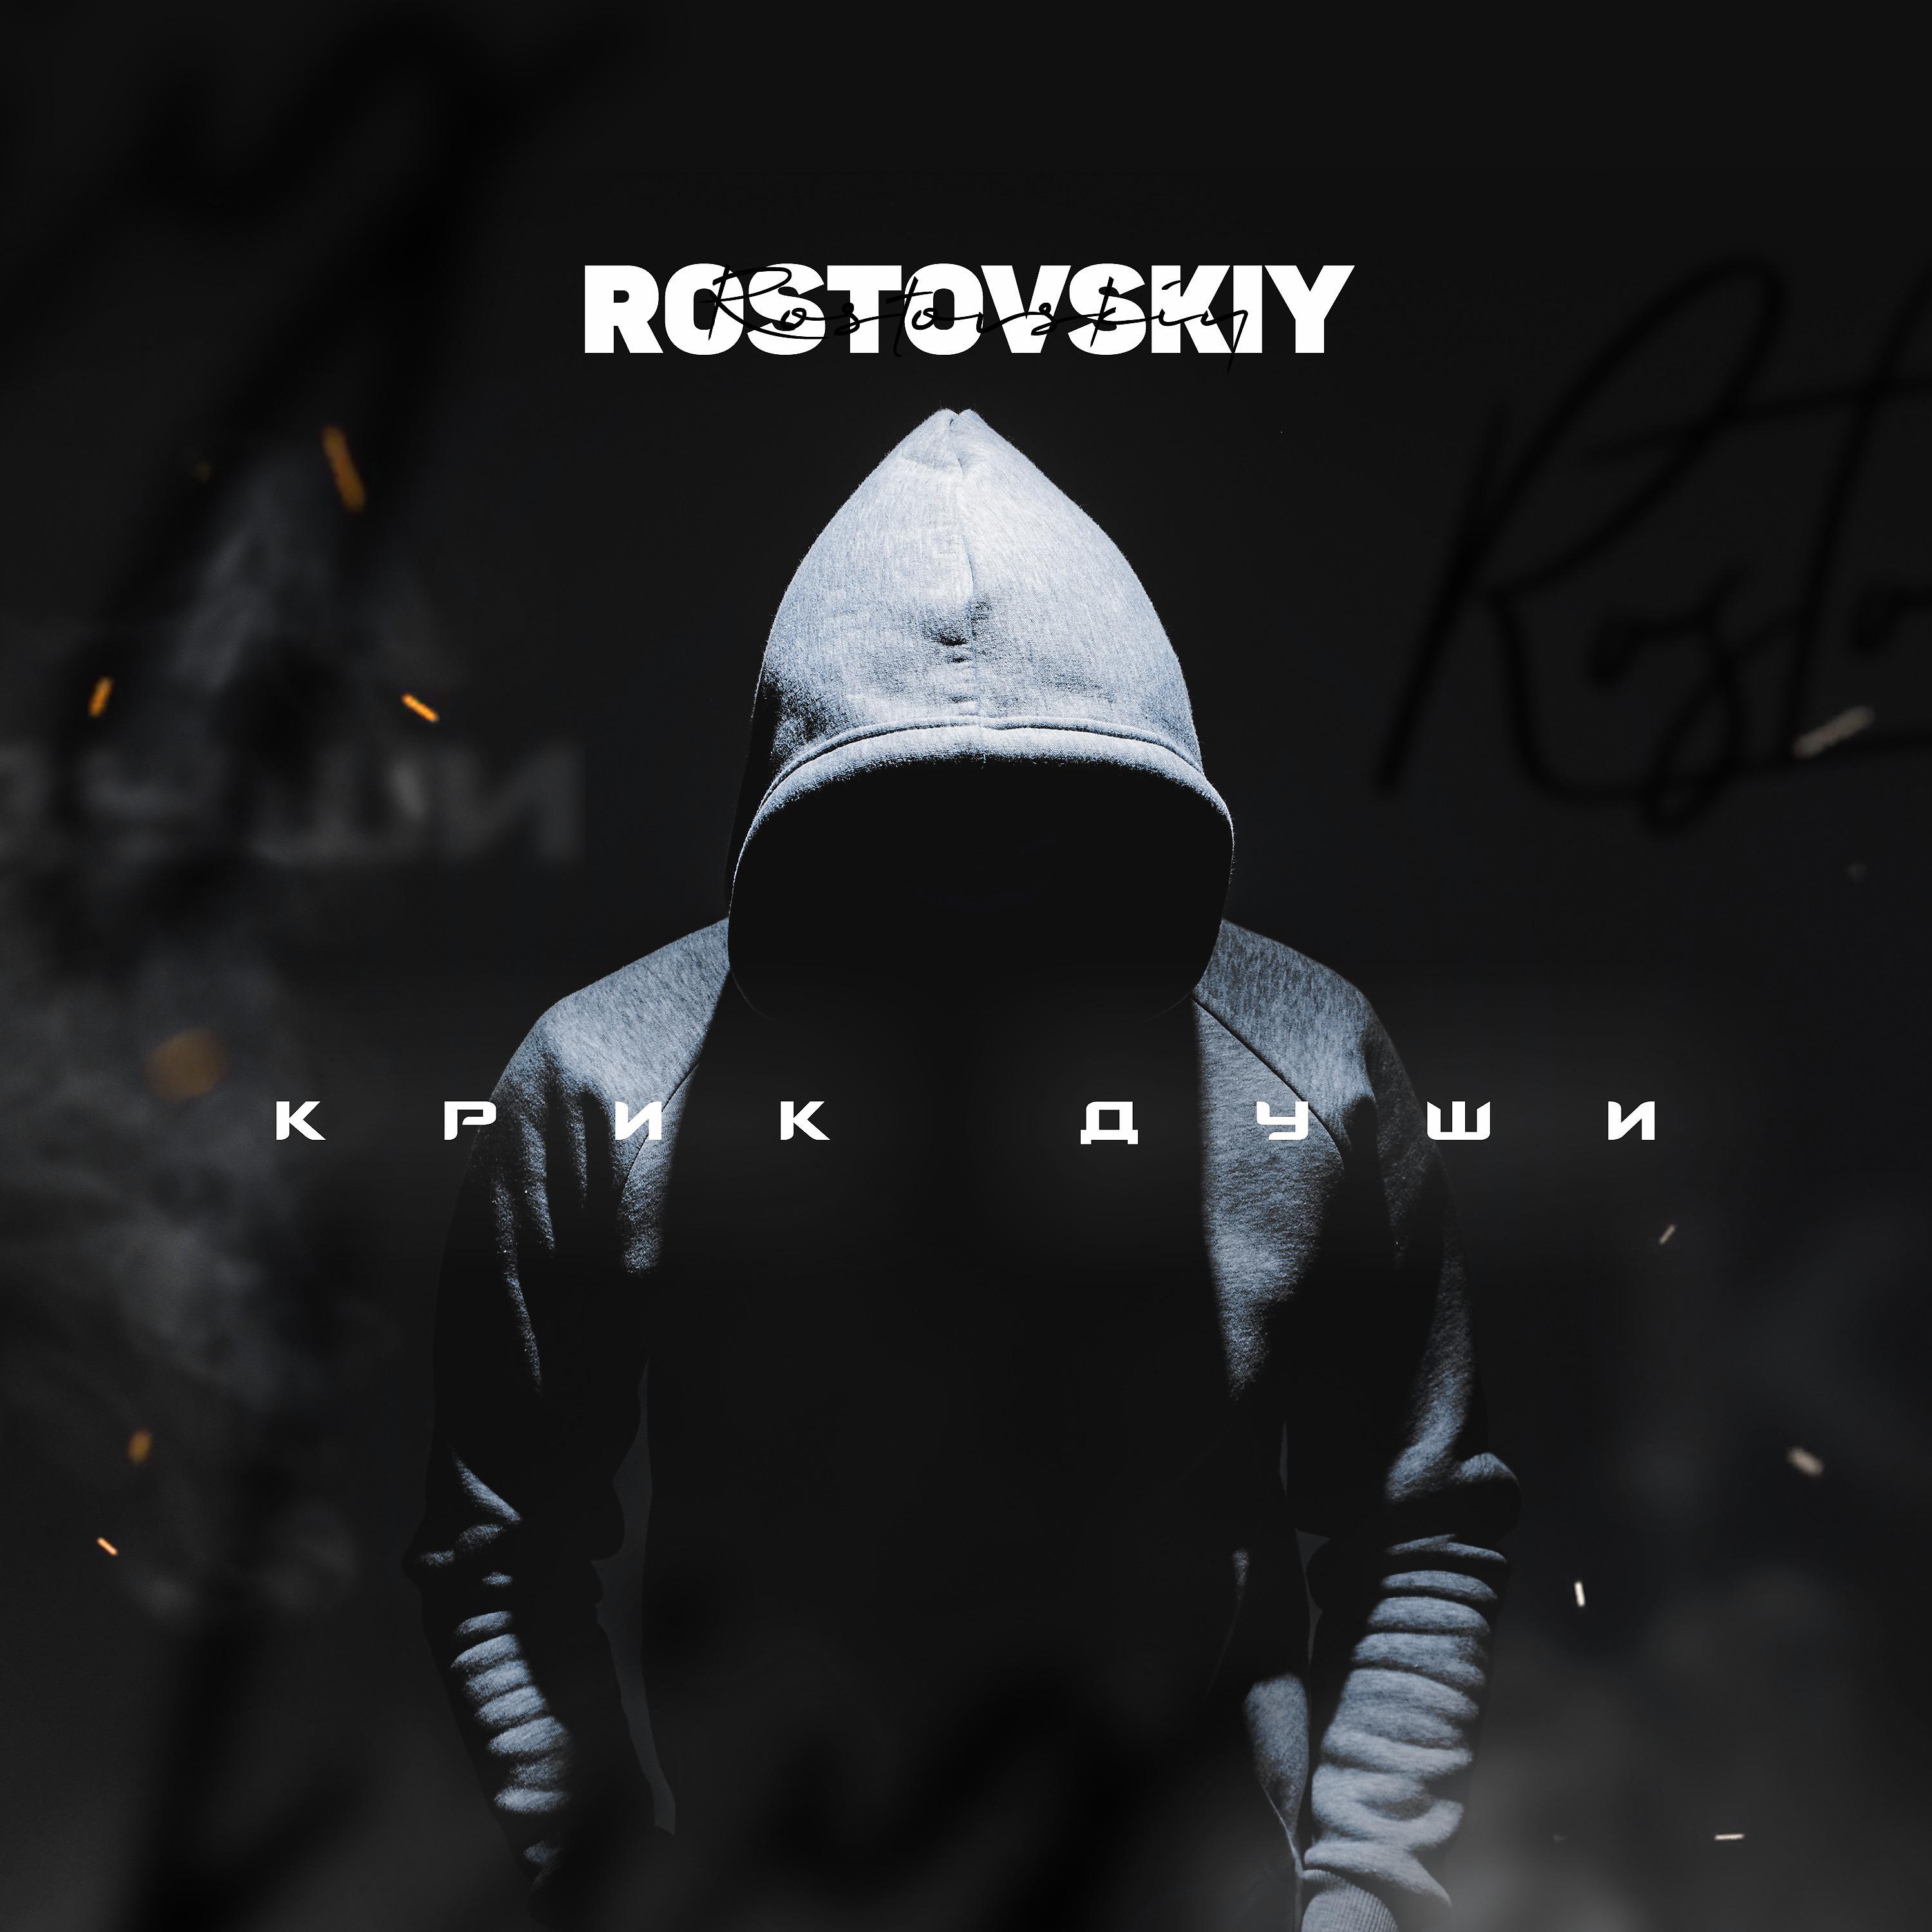 Rostovskiy - Из-за неё